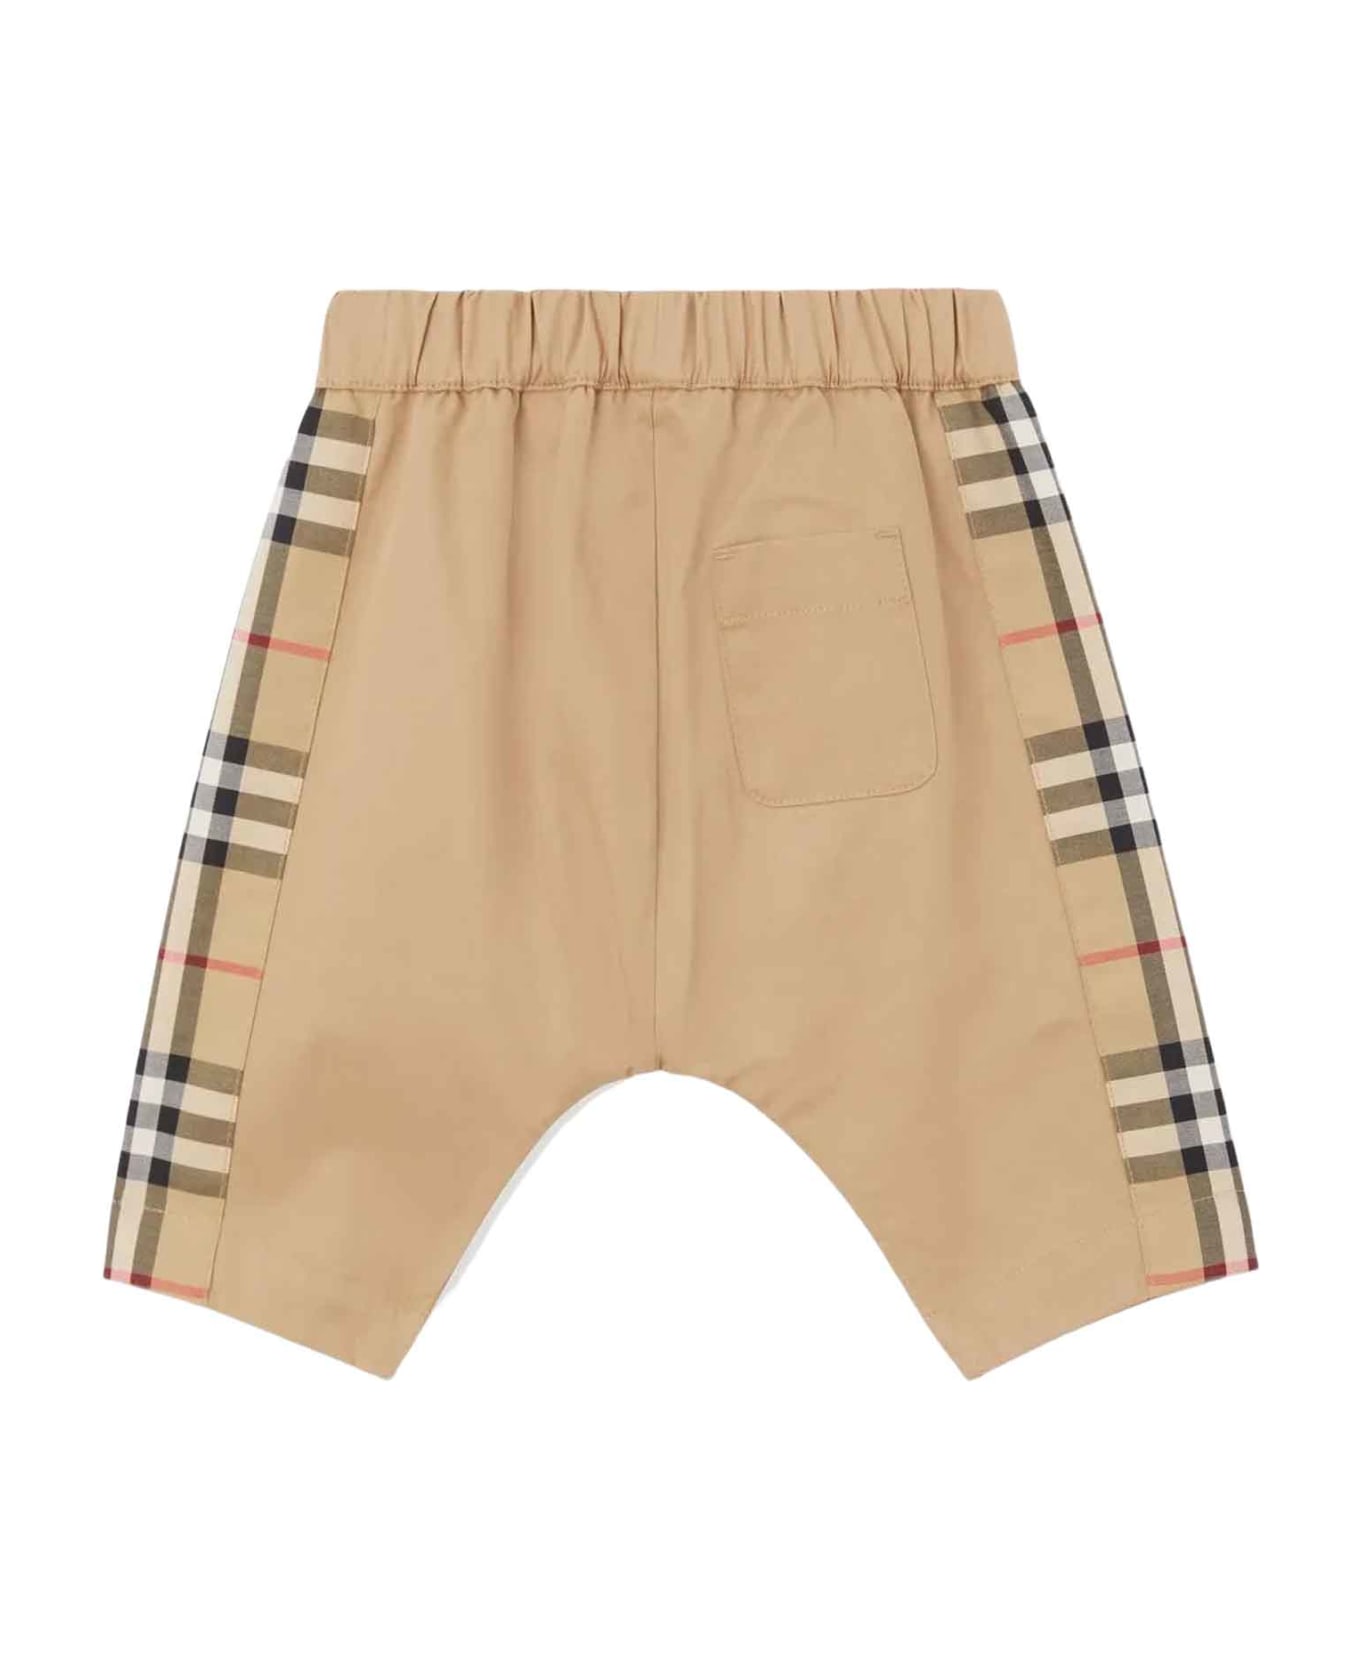 Burberry New Shorts Baby Unisex - New